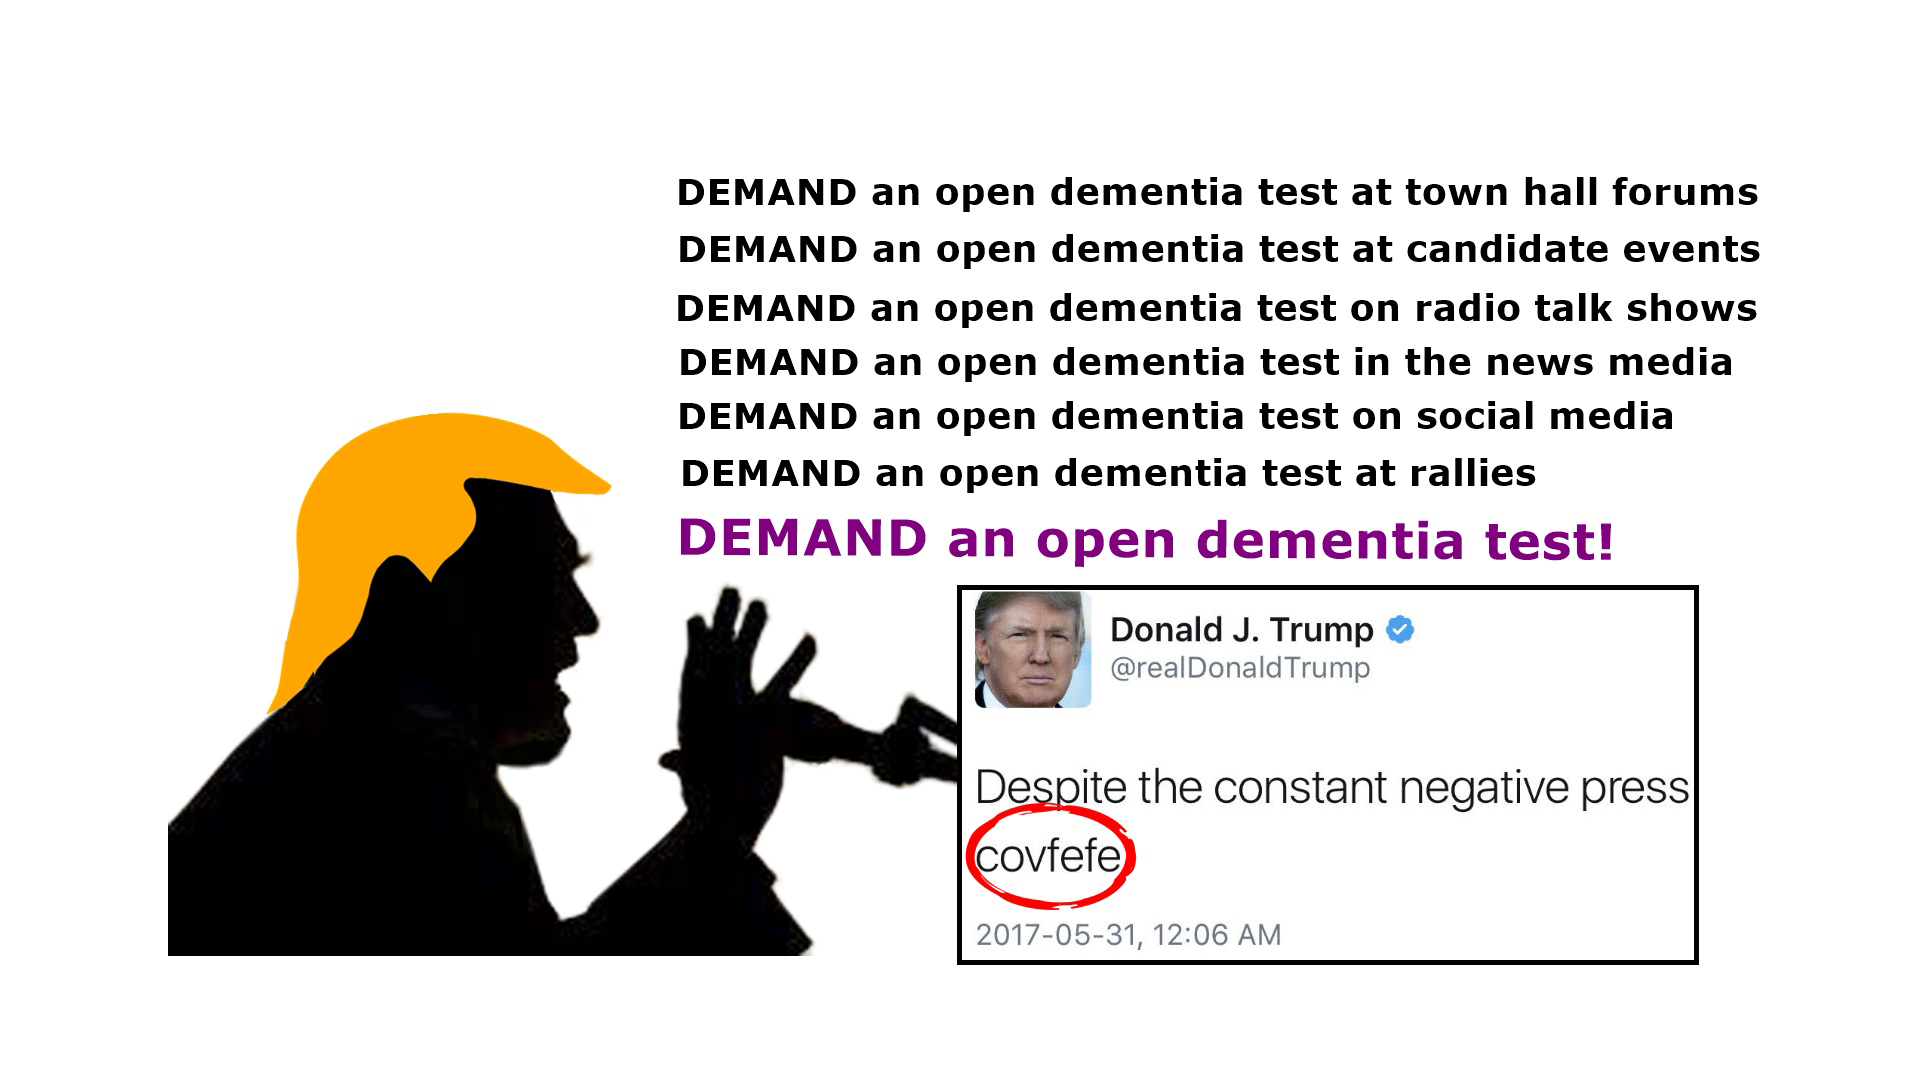 Dementia test, Trump, independent, public disclosure, town hall, radio talk shows, news media, social media, candidate rallies